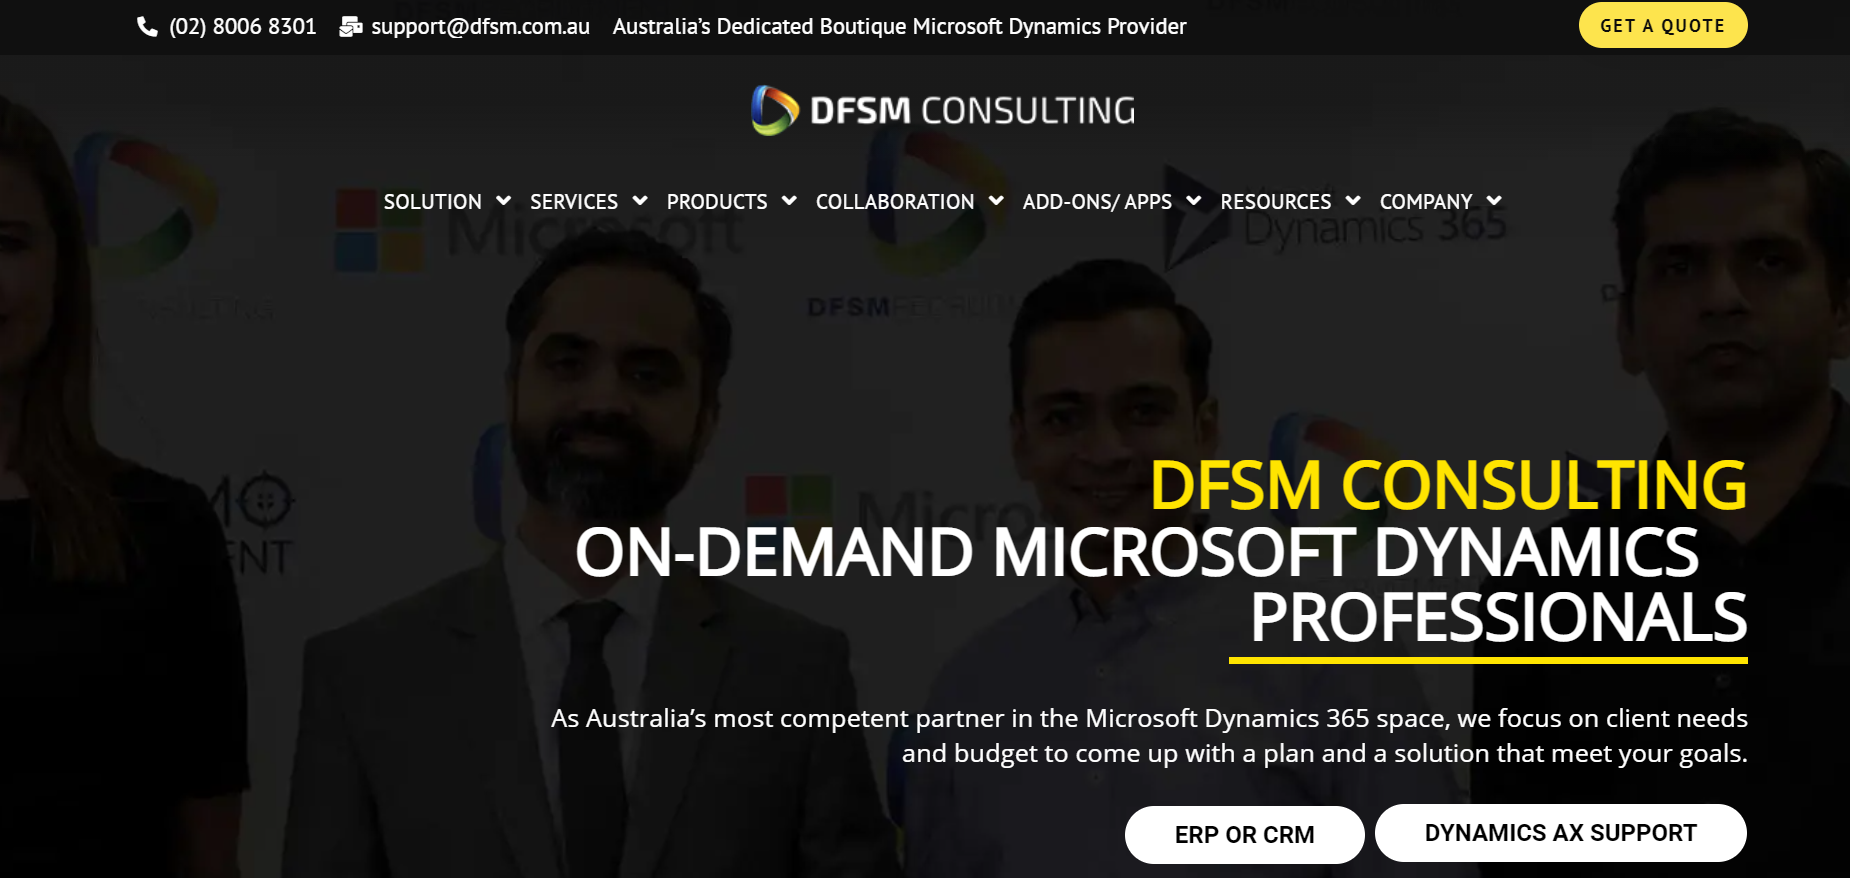 DFSM Consulting - Australia's Boutique Microsoft Dynamics Provider.